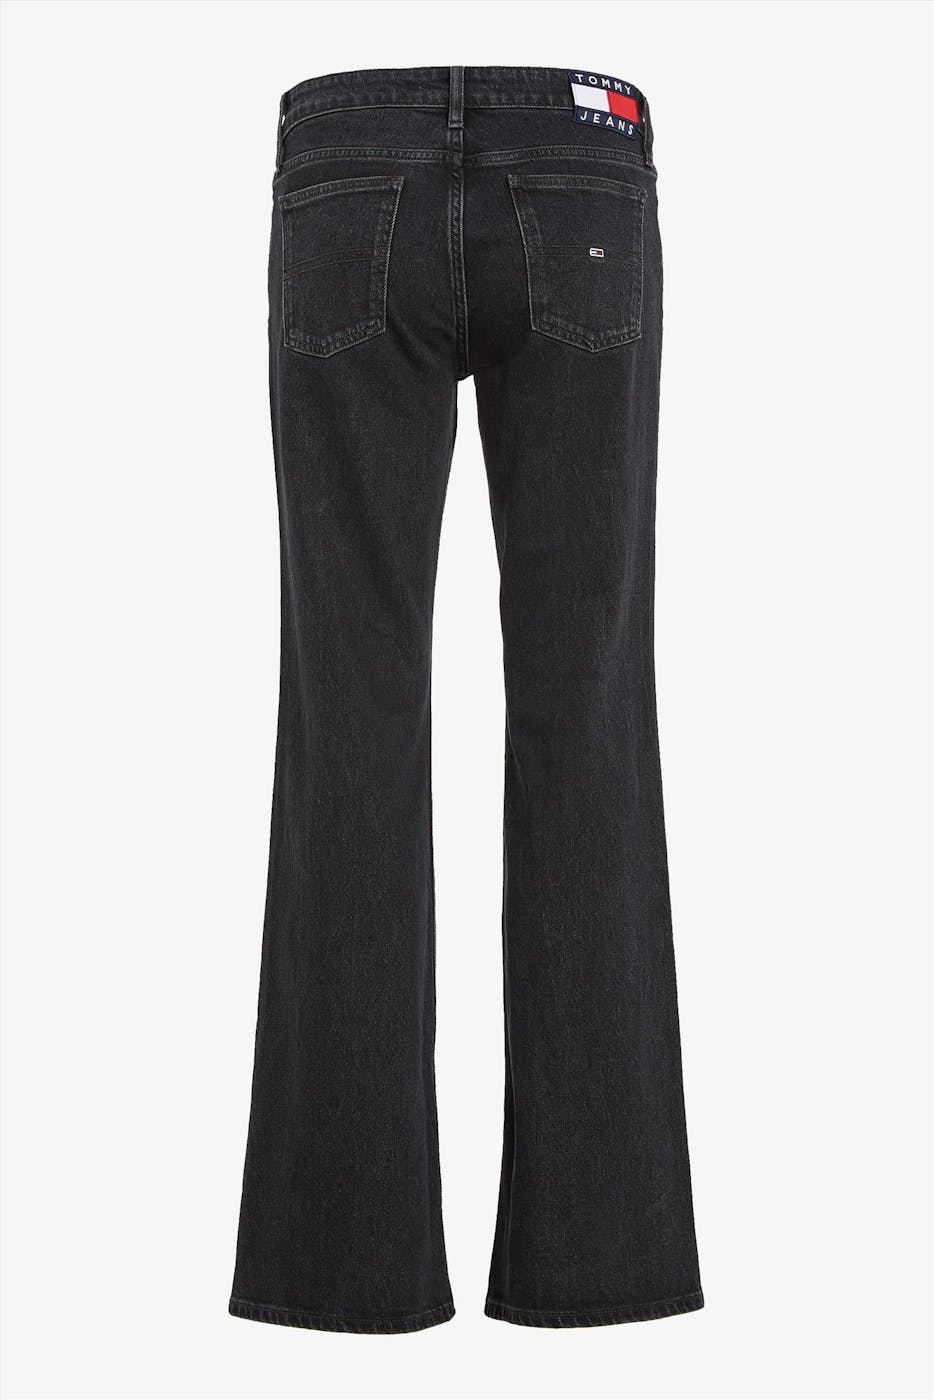 Tommy Jeans - Zwarte Sophie Flared jeans